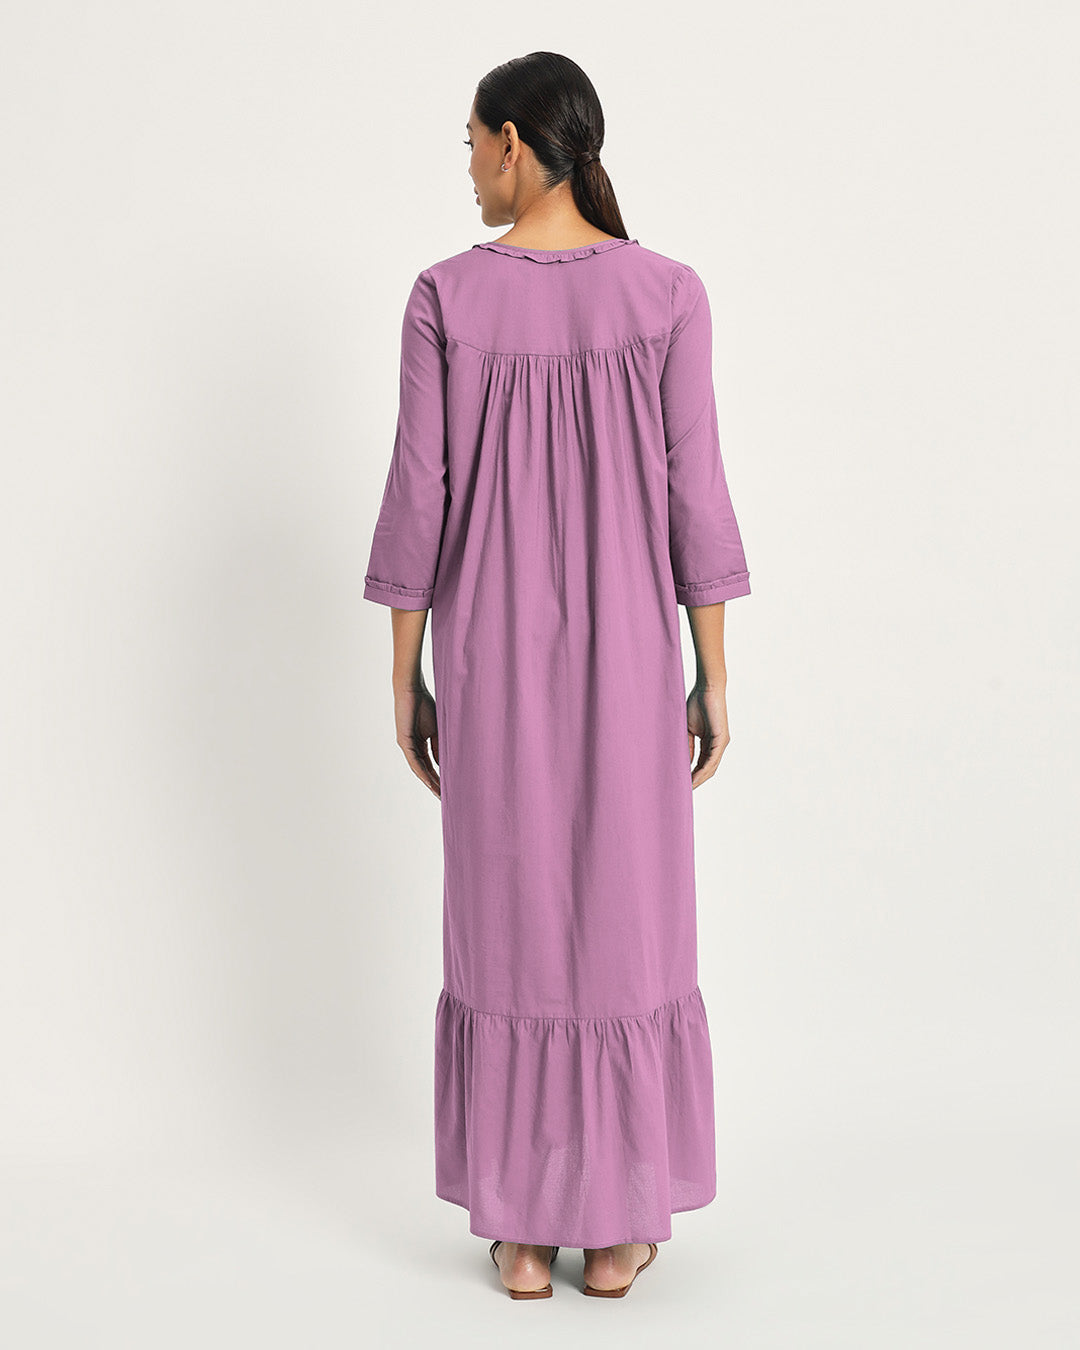 Combo: Iris Pink & Wisteria Purple Cloud Nine Nightdress